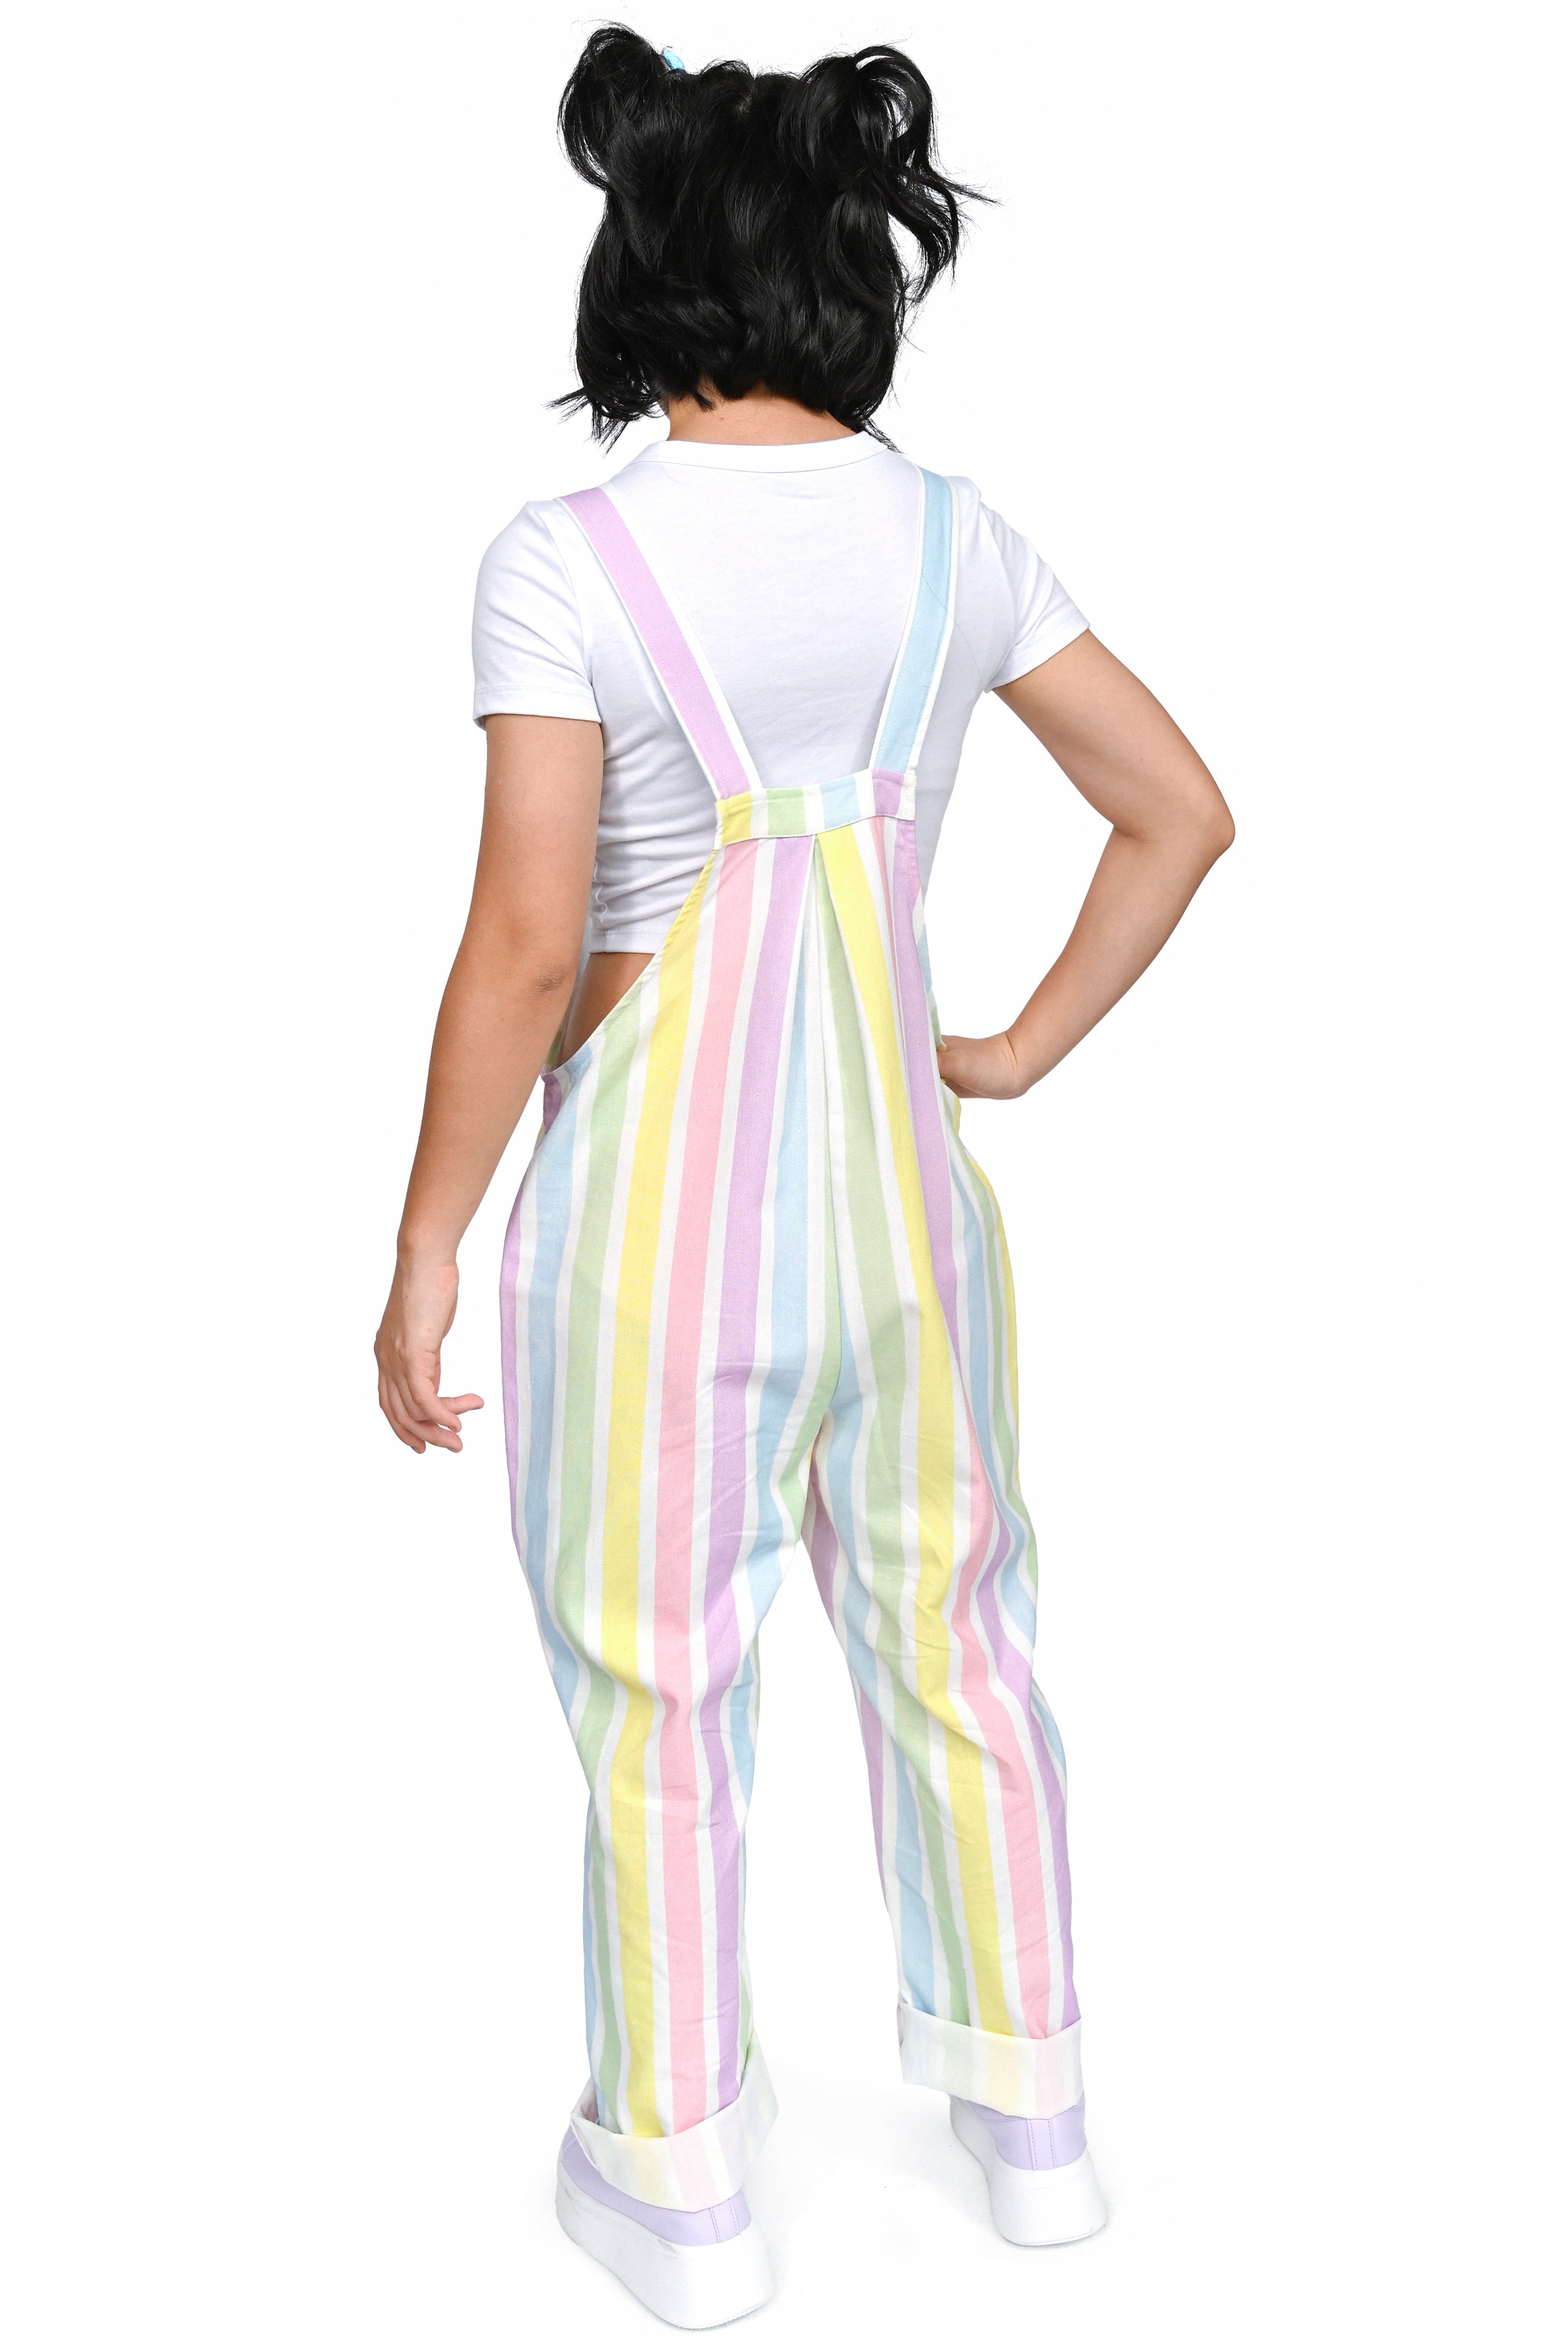 Rainbow Stripe Overalls - Size 4XL left!